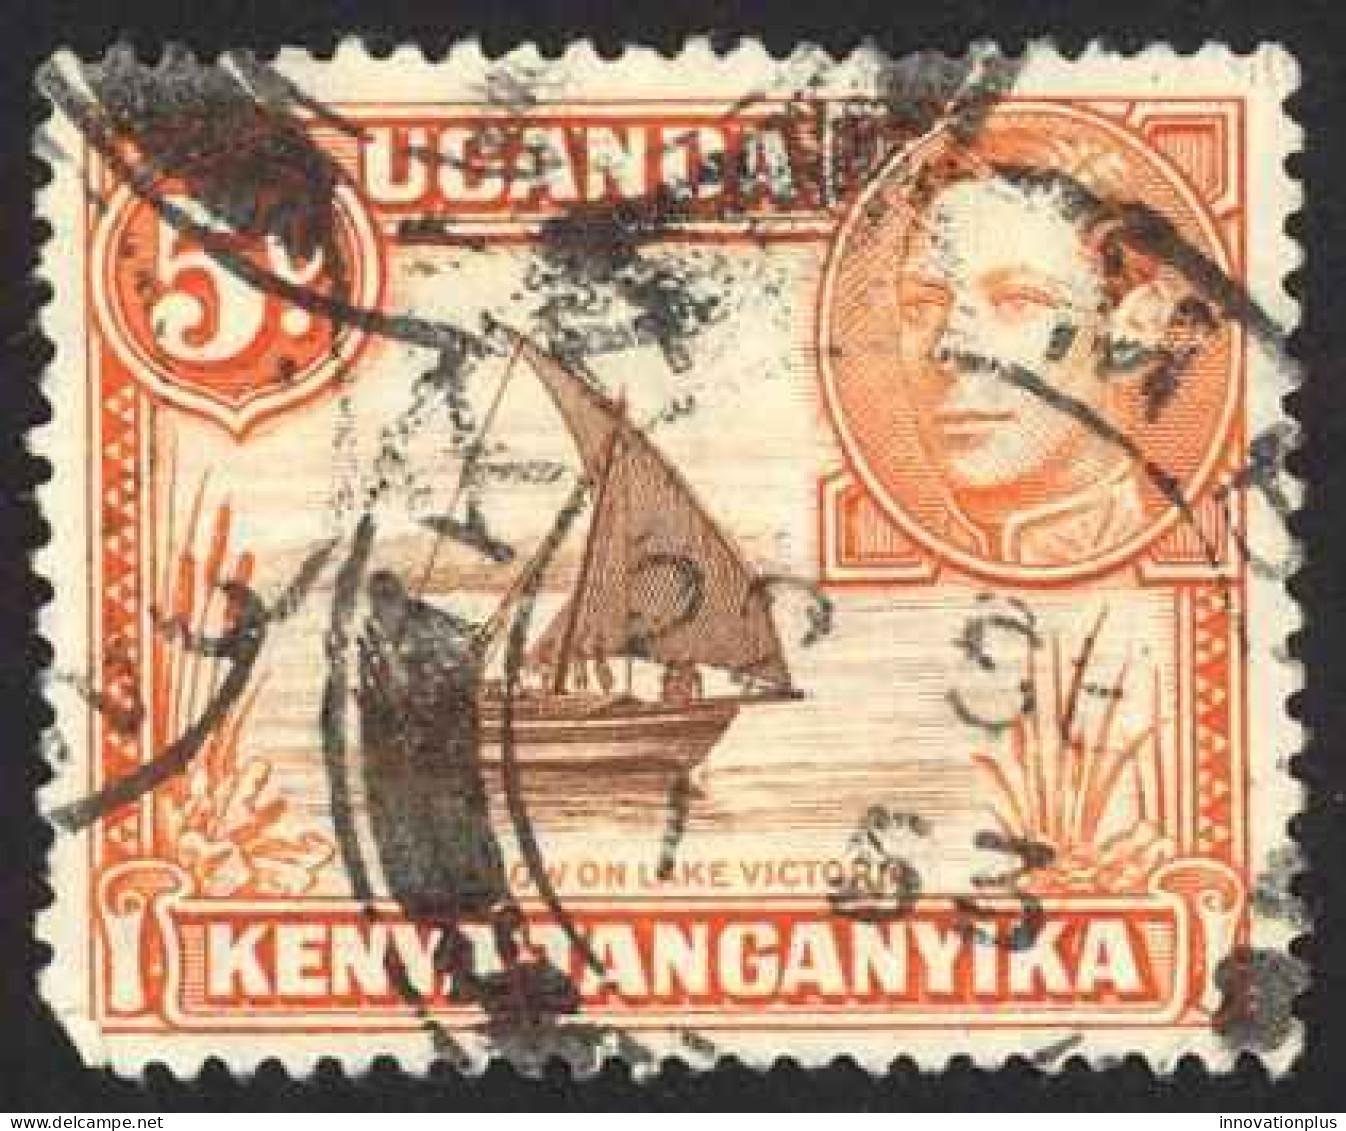 Kenya, Uganda, Tanzania Sc# 68 Used (a) 1949 5c Red Orange & Brown KGVI - Kenya, Oeganda & Tanzania